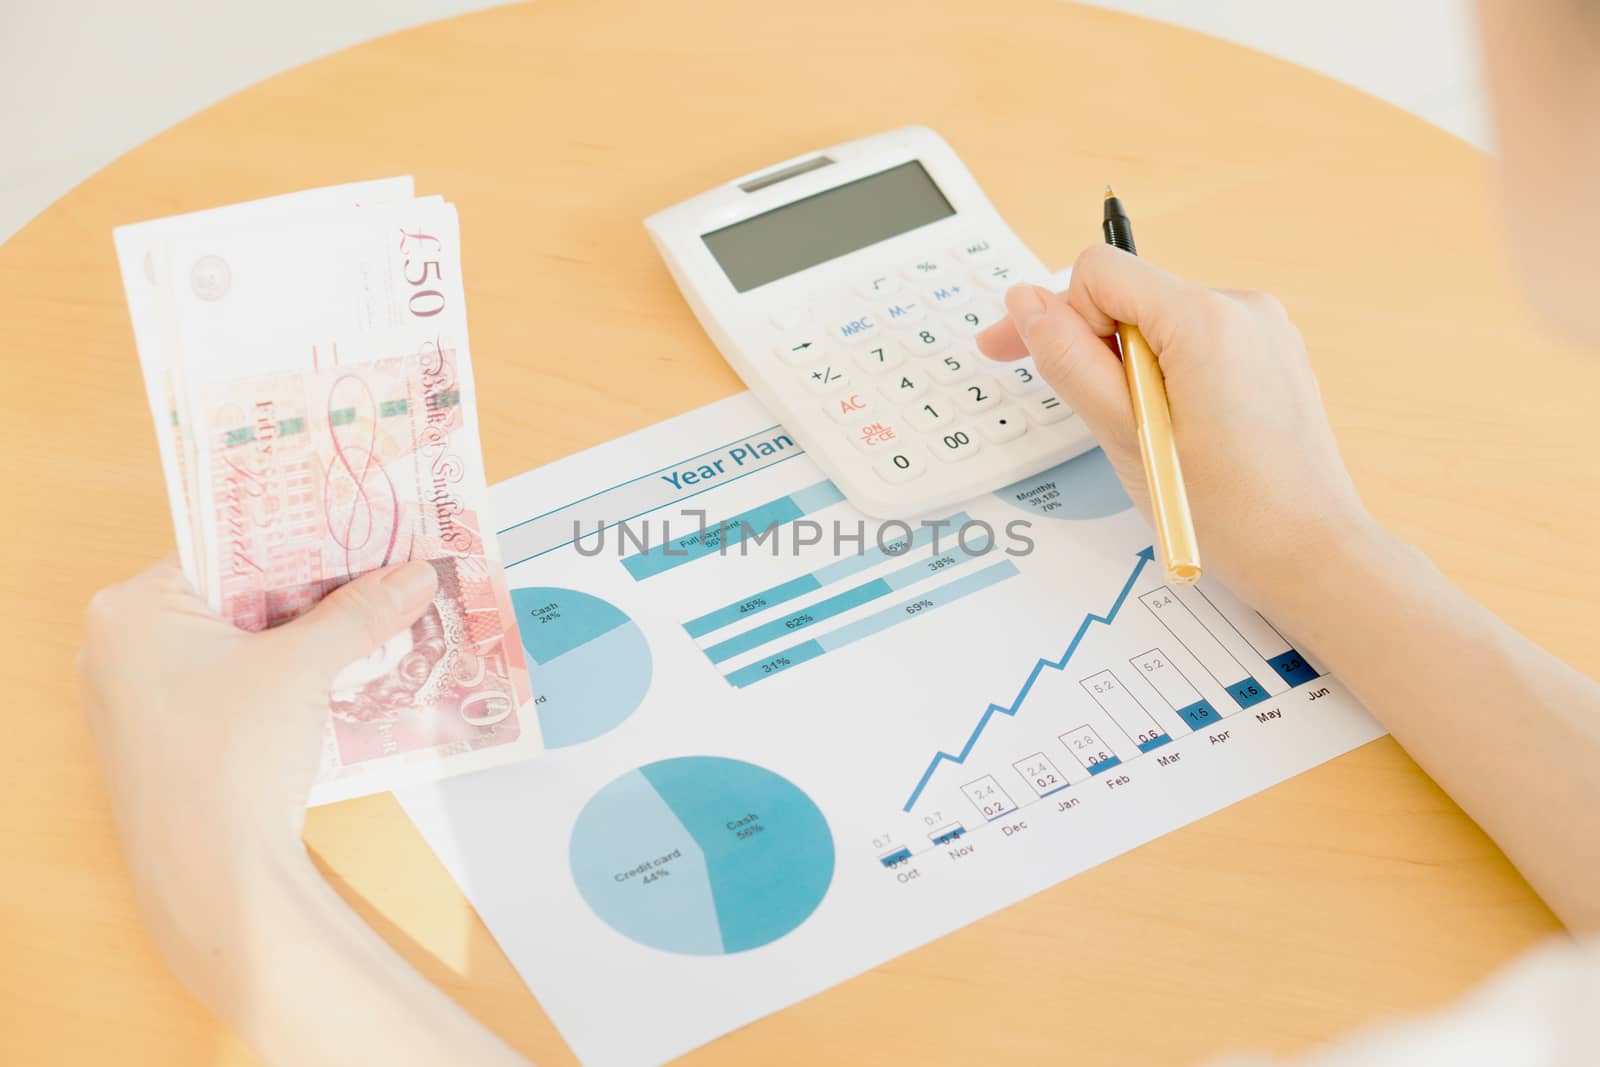 Businesswoman analyze year plan with calculator 